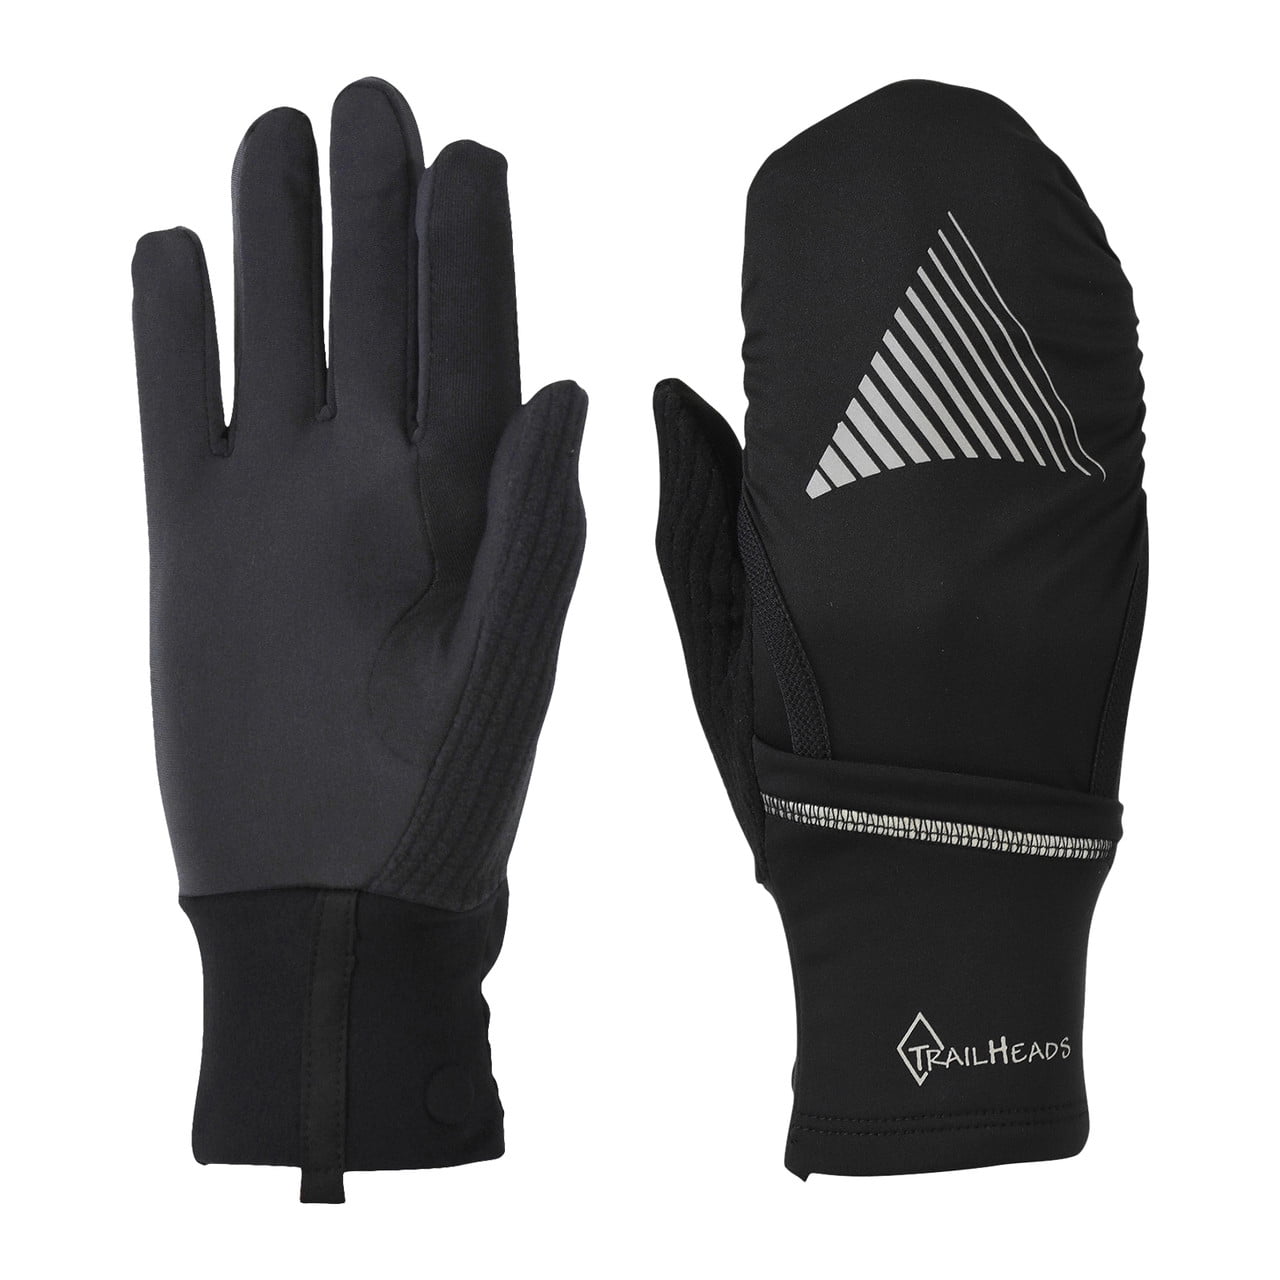 Kayak Gloves for Women - Search Shopping